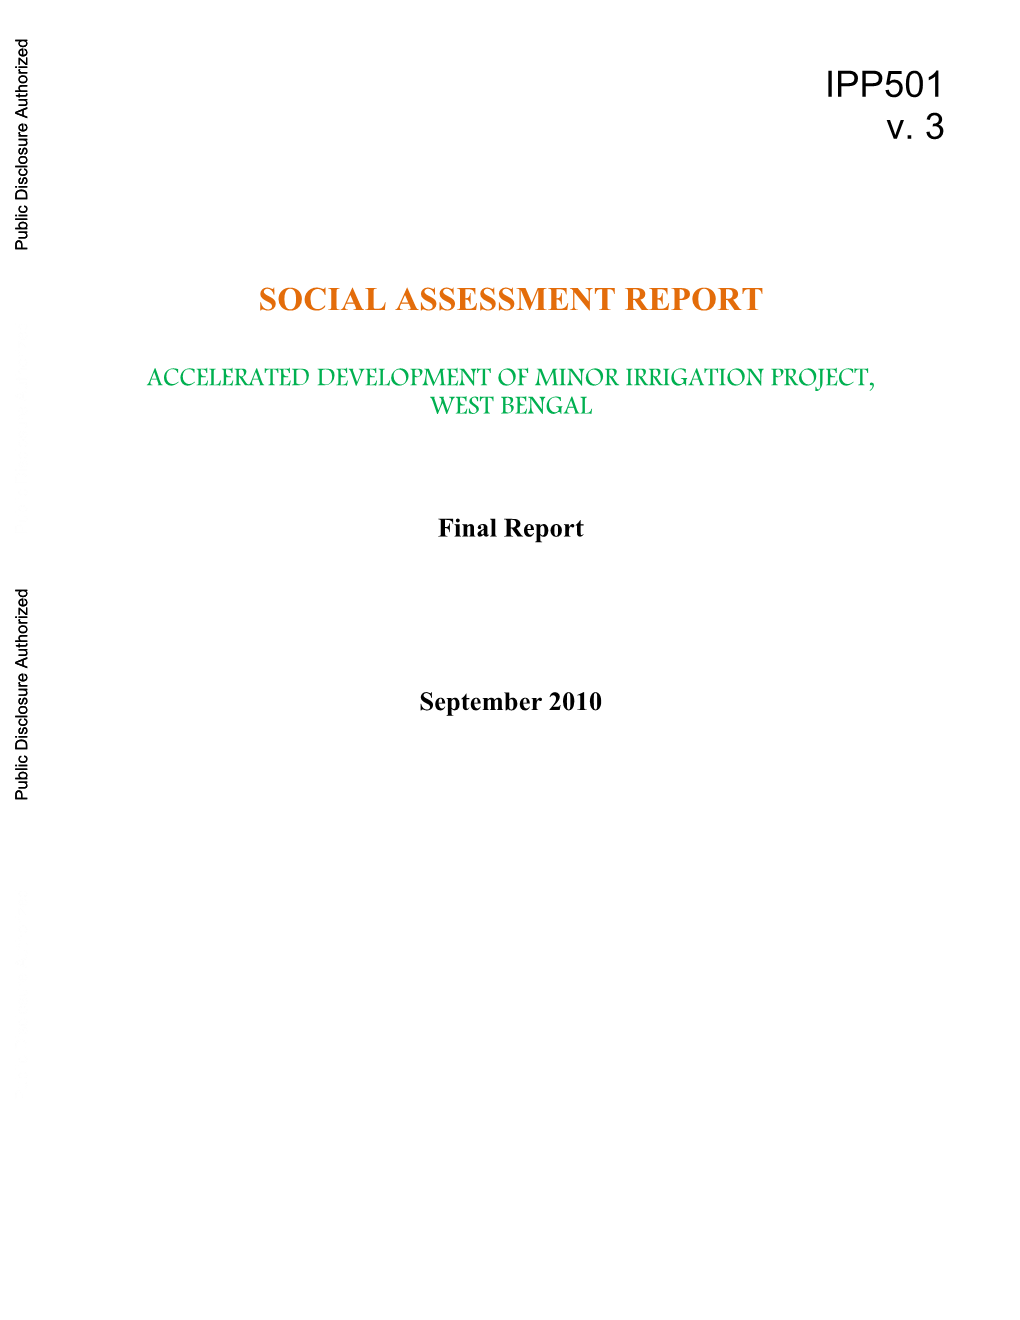 IPP501 V. 3 Public Disclosure Authorized SOCIAL ASSESSMENT REPORT